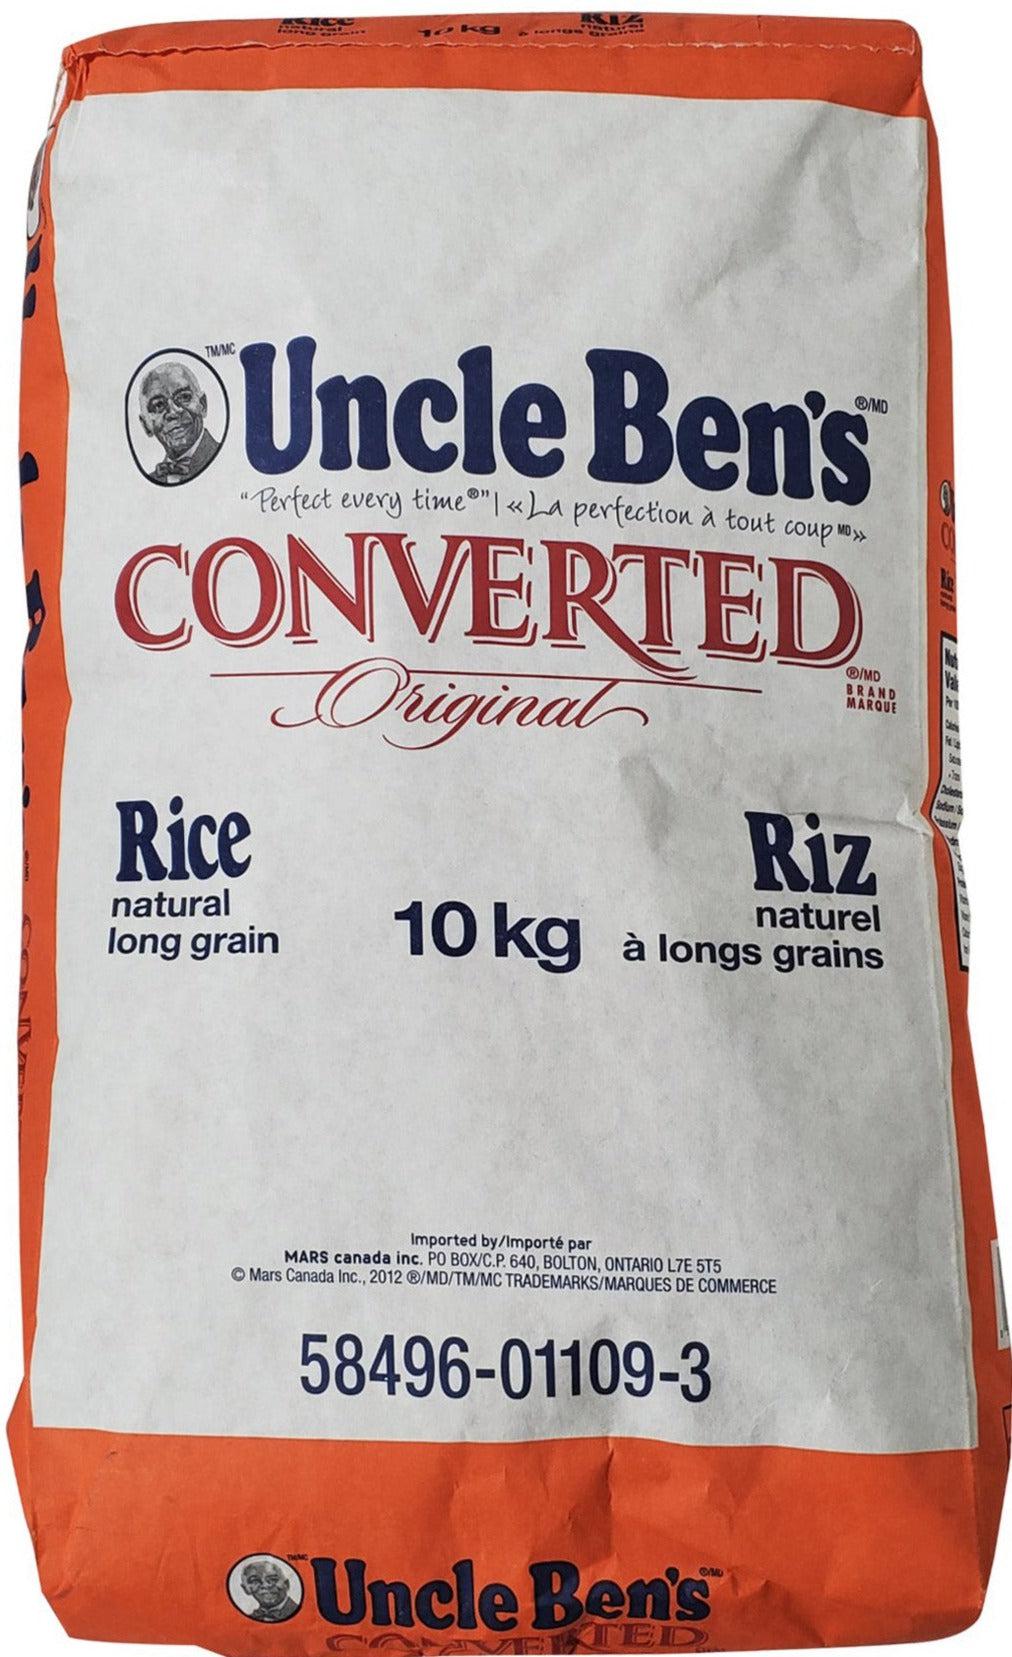 Riz long grain 10 min, Ben's original (2 Kg)